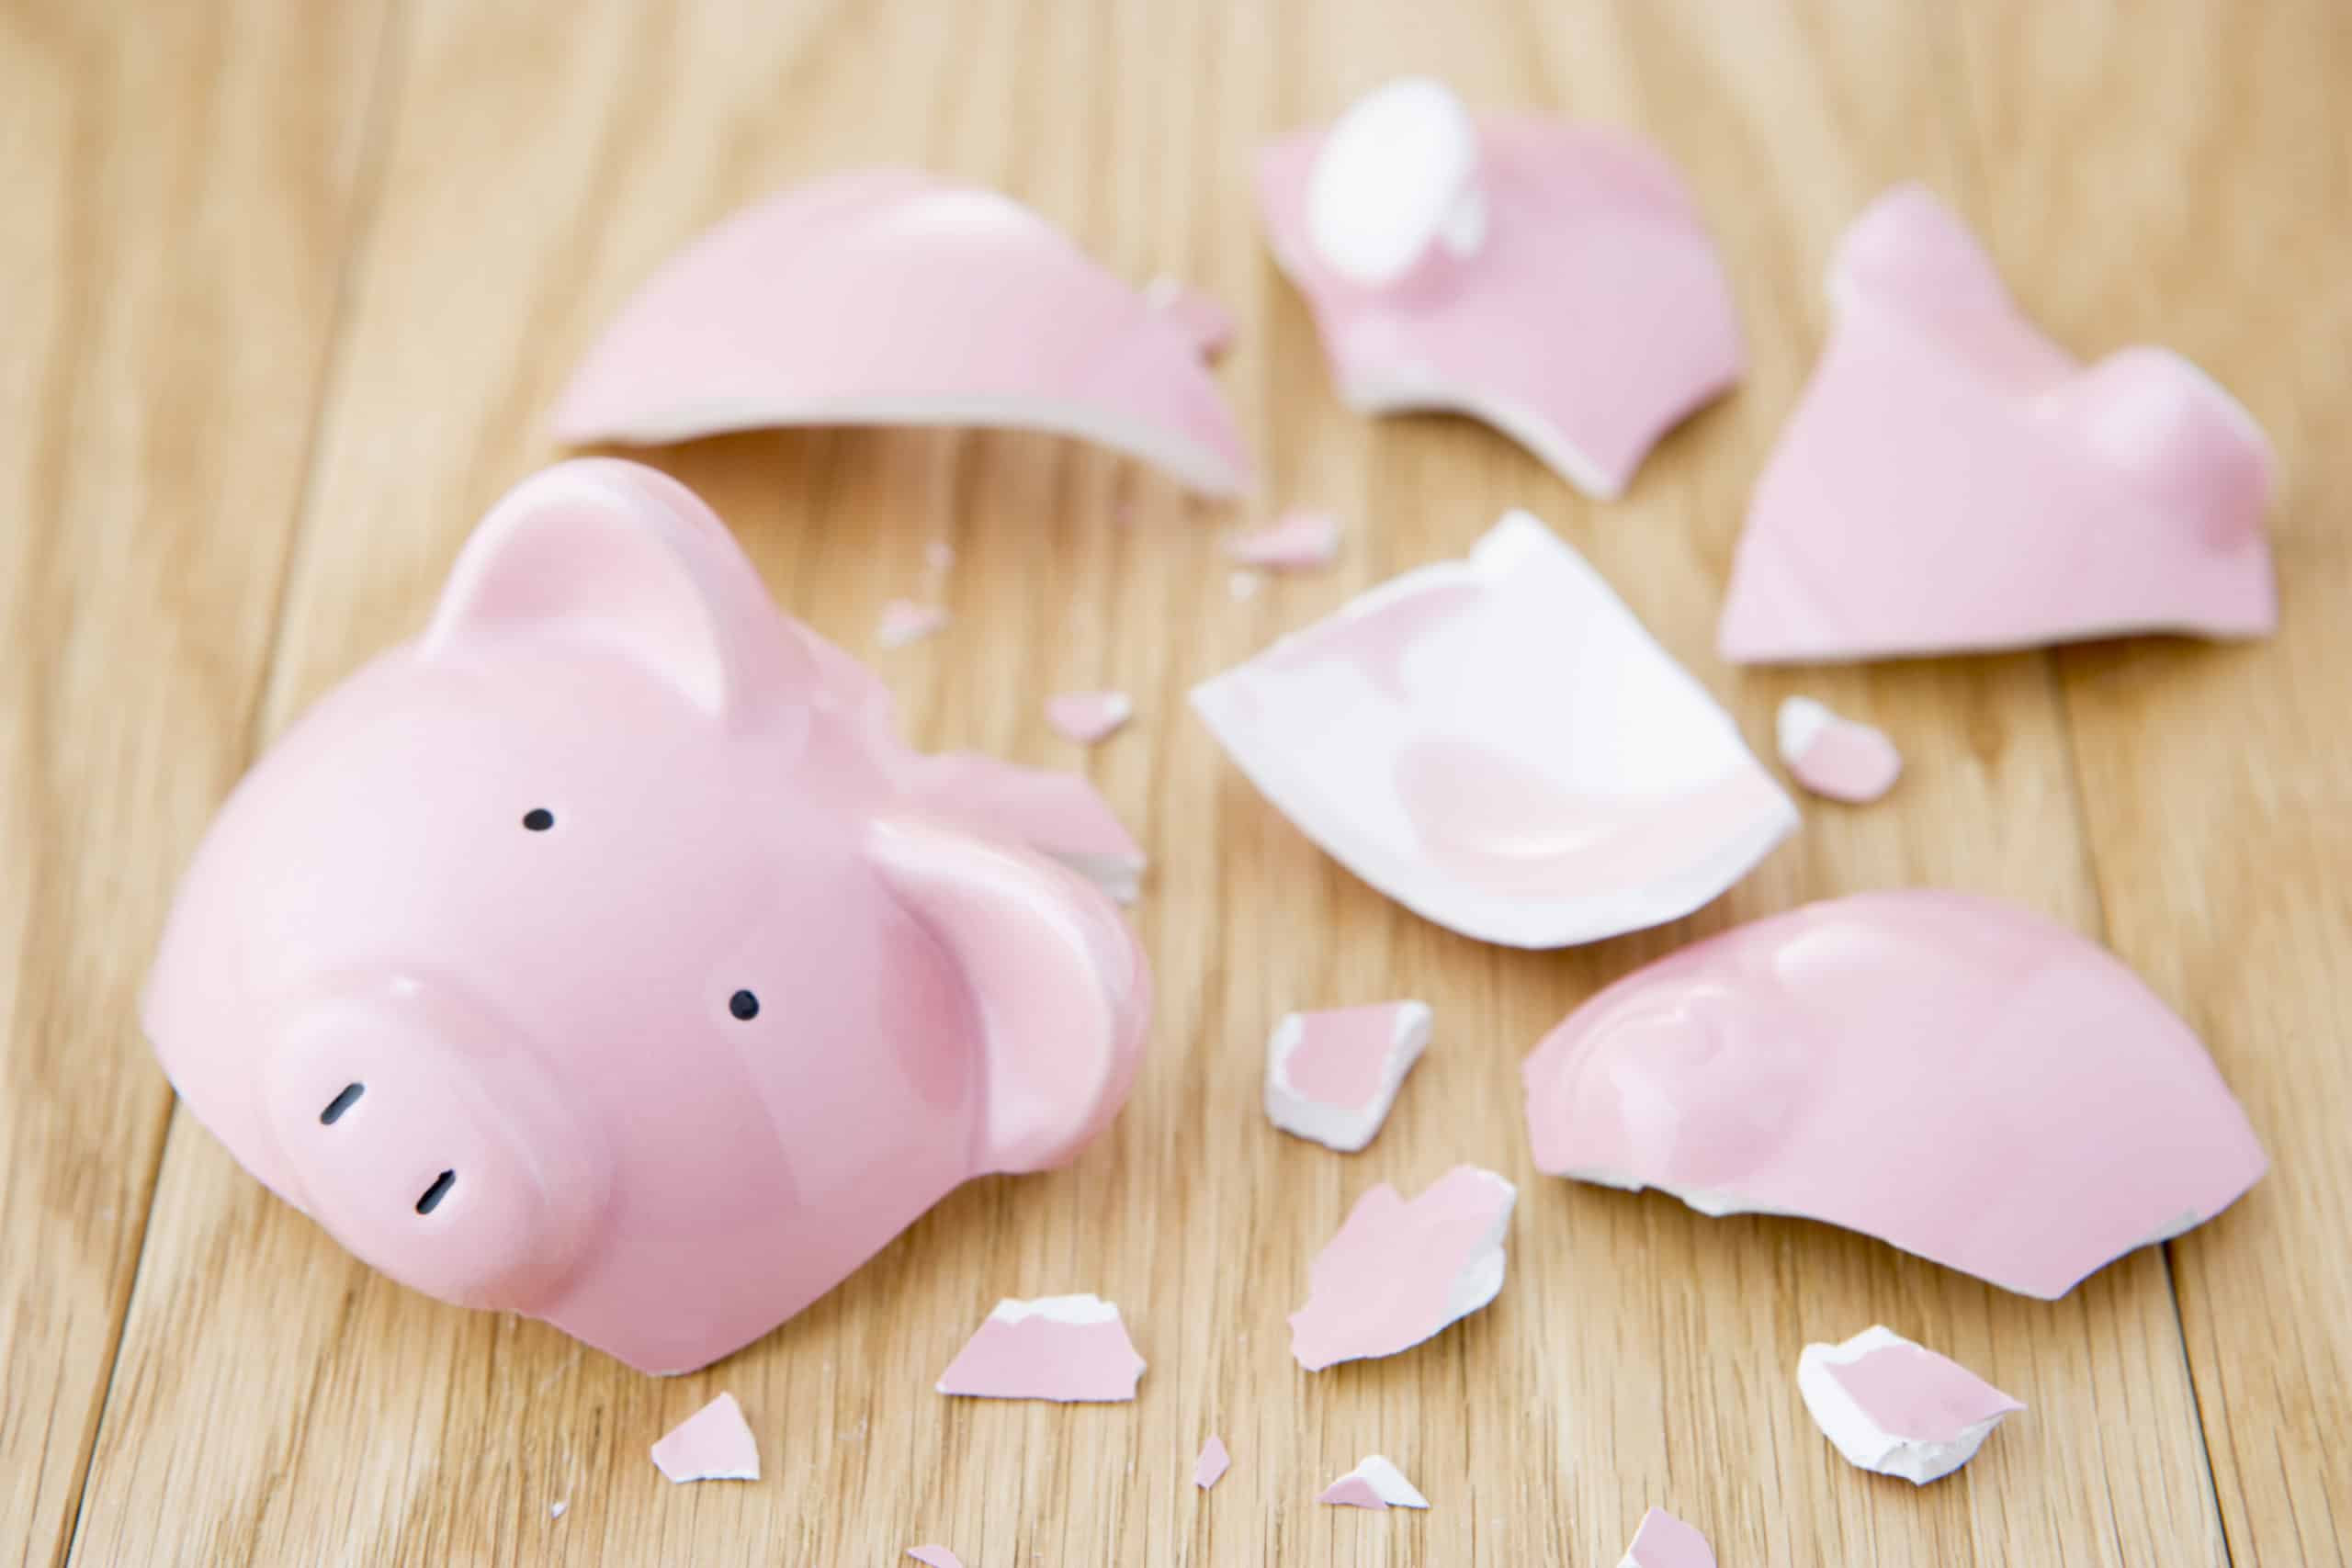 Broken pink ceramic piggy bank with no money inside